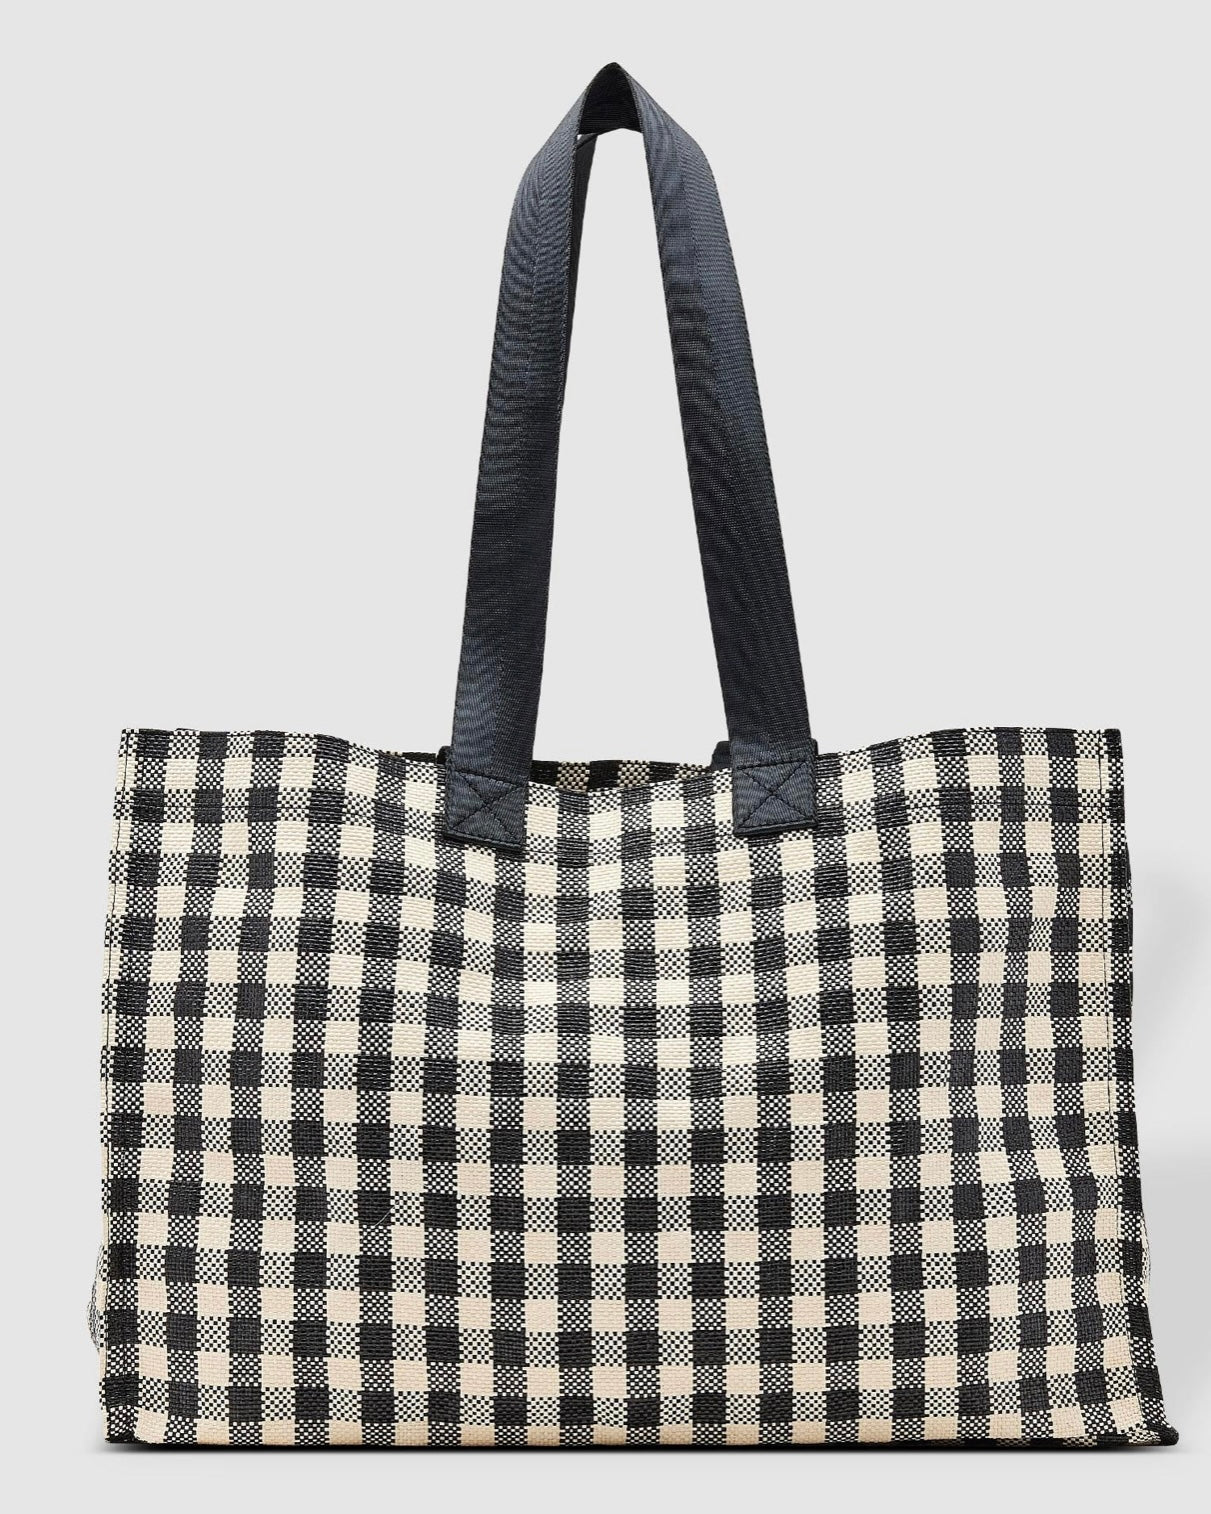 Simpson Beach/Carry All/Shopper Bag (Black/Cream), louenhide, beach bag, tote bag, shopper bag